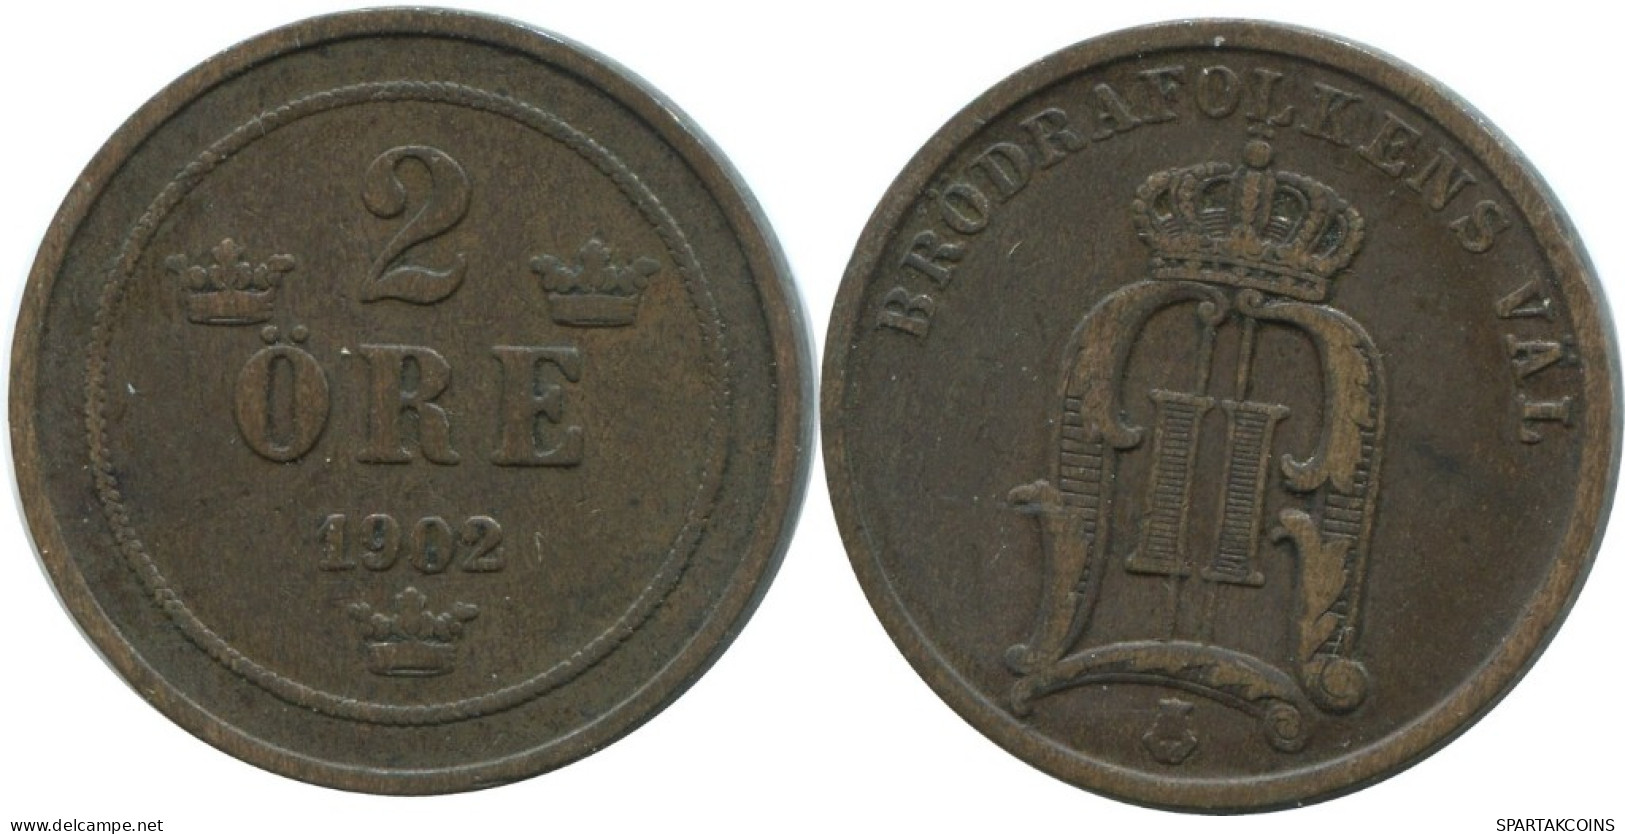 2 ORE 1902 SWEDEN Coin #AD013.2.U.A - Suède